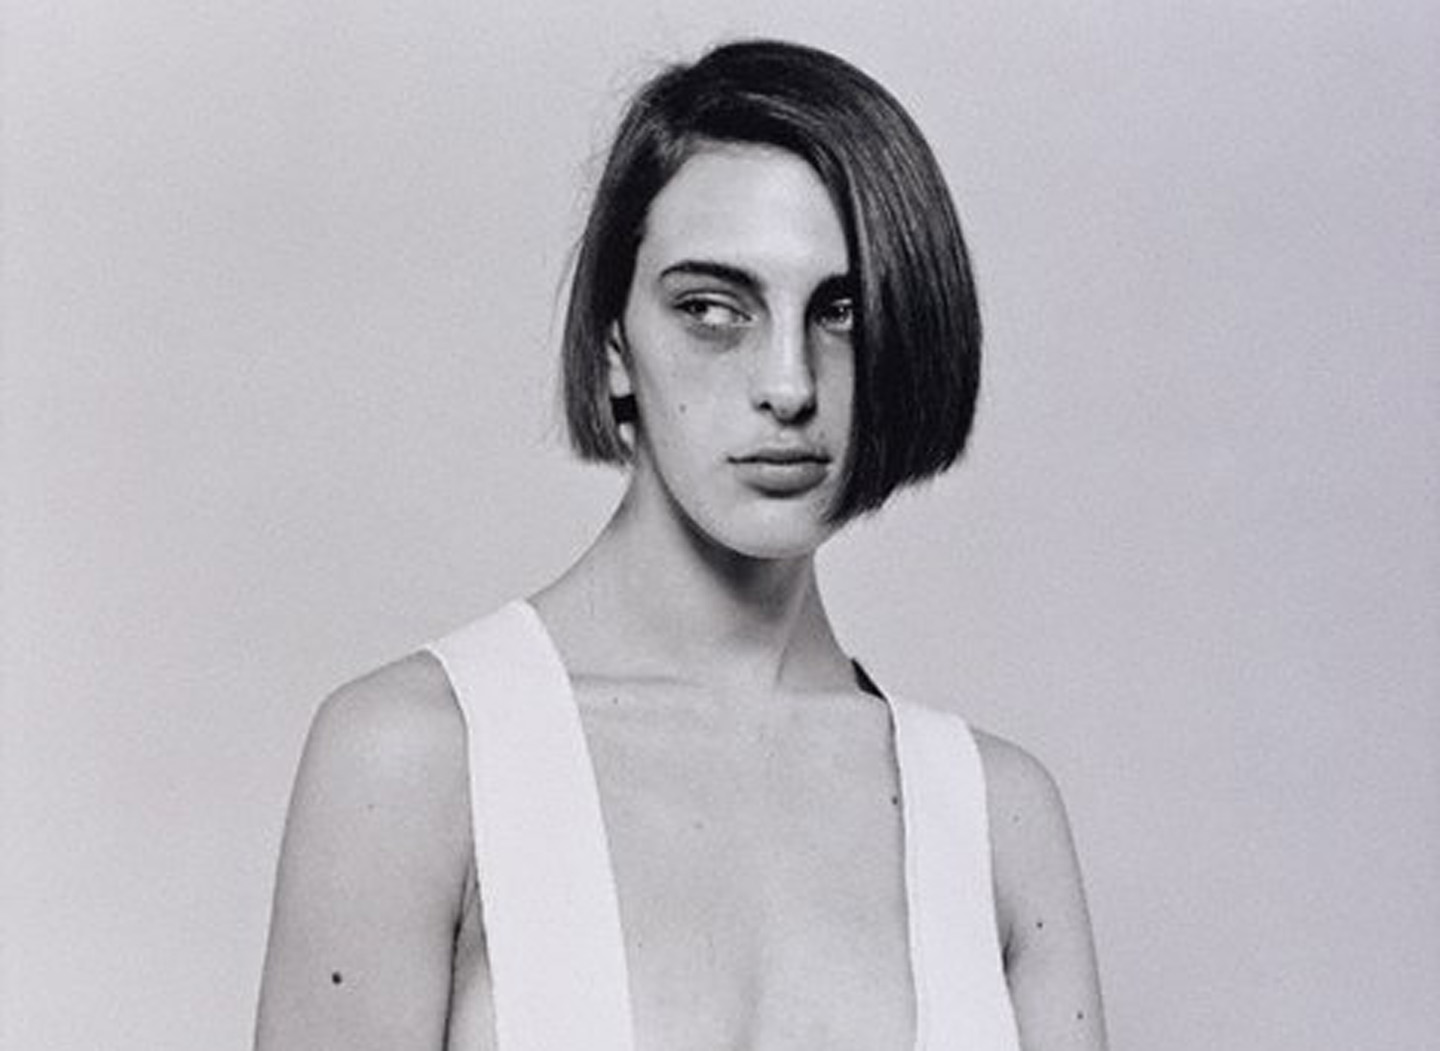 Modern Lovers, 1989-90. Беттина Реймс (Bettina Rheims) - современный французский фотограф. Современная фотография. Фотография как искусство